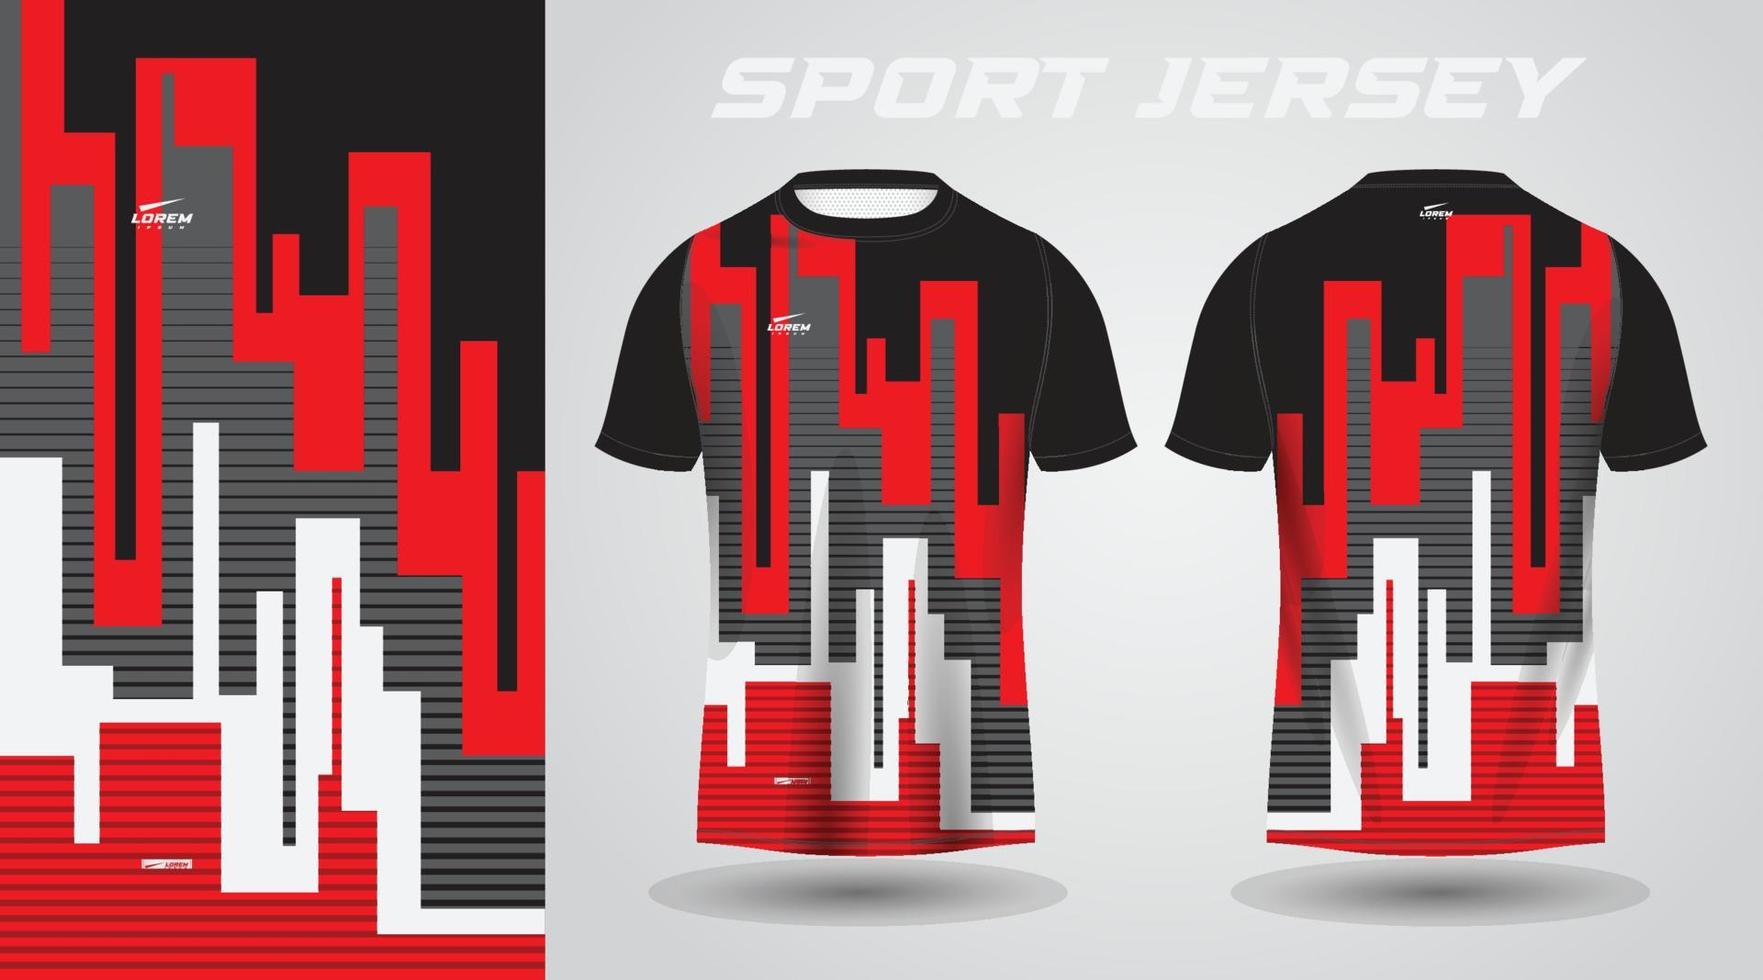 diseño de camiseta deportiva de camiseta negra roja vector